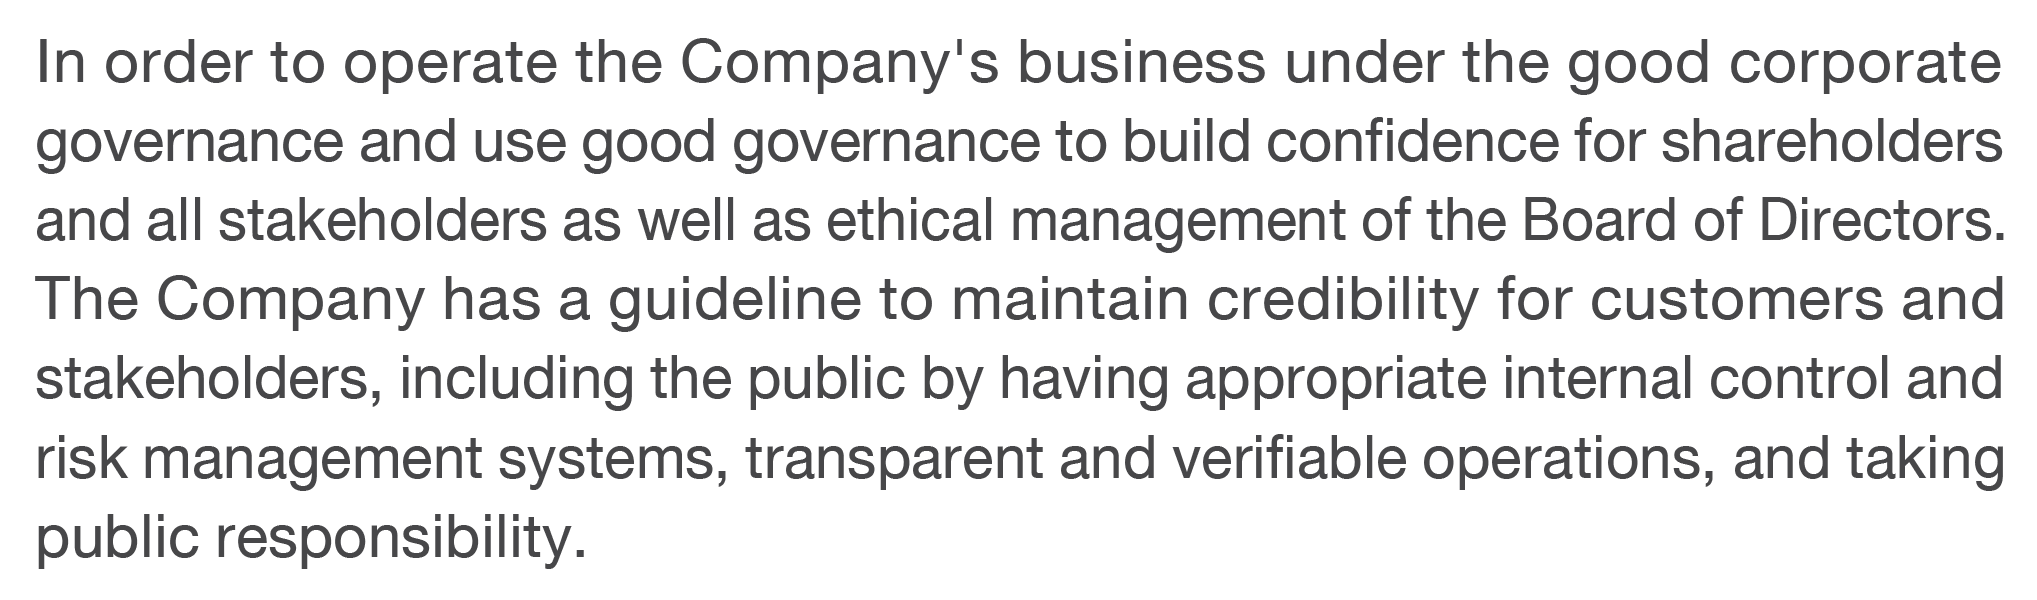 Corporate_Governance-title